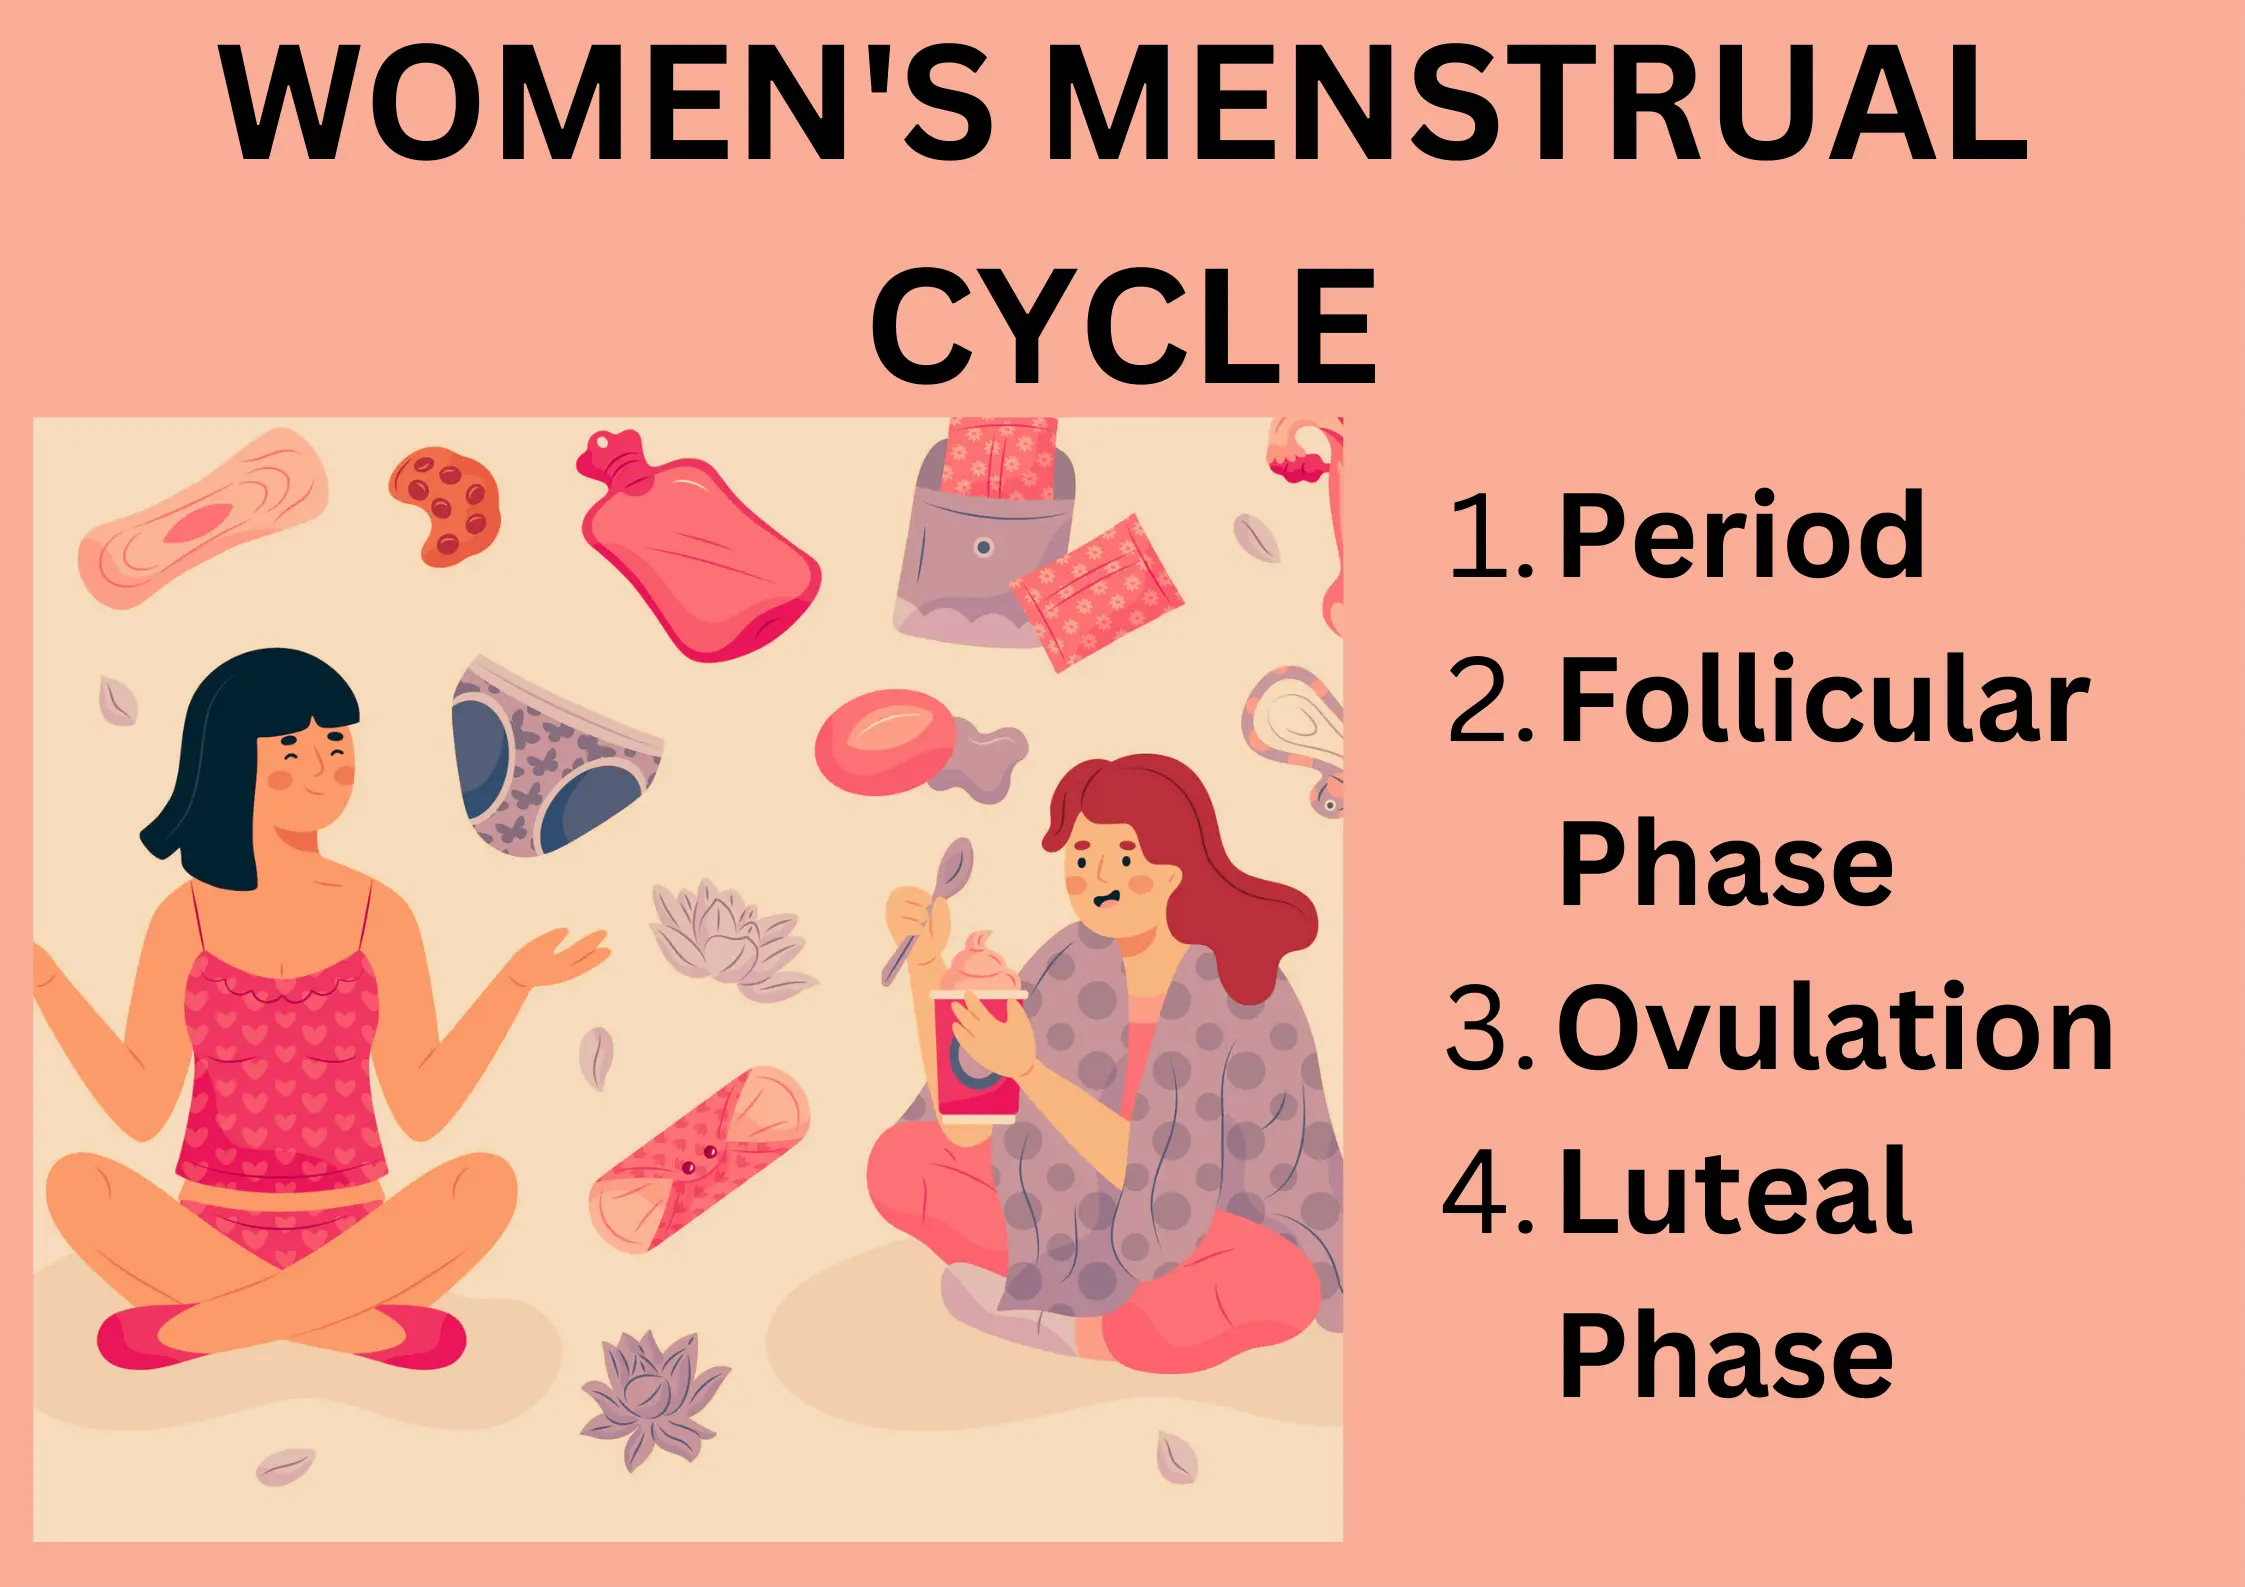 menstrual mood swings